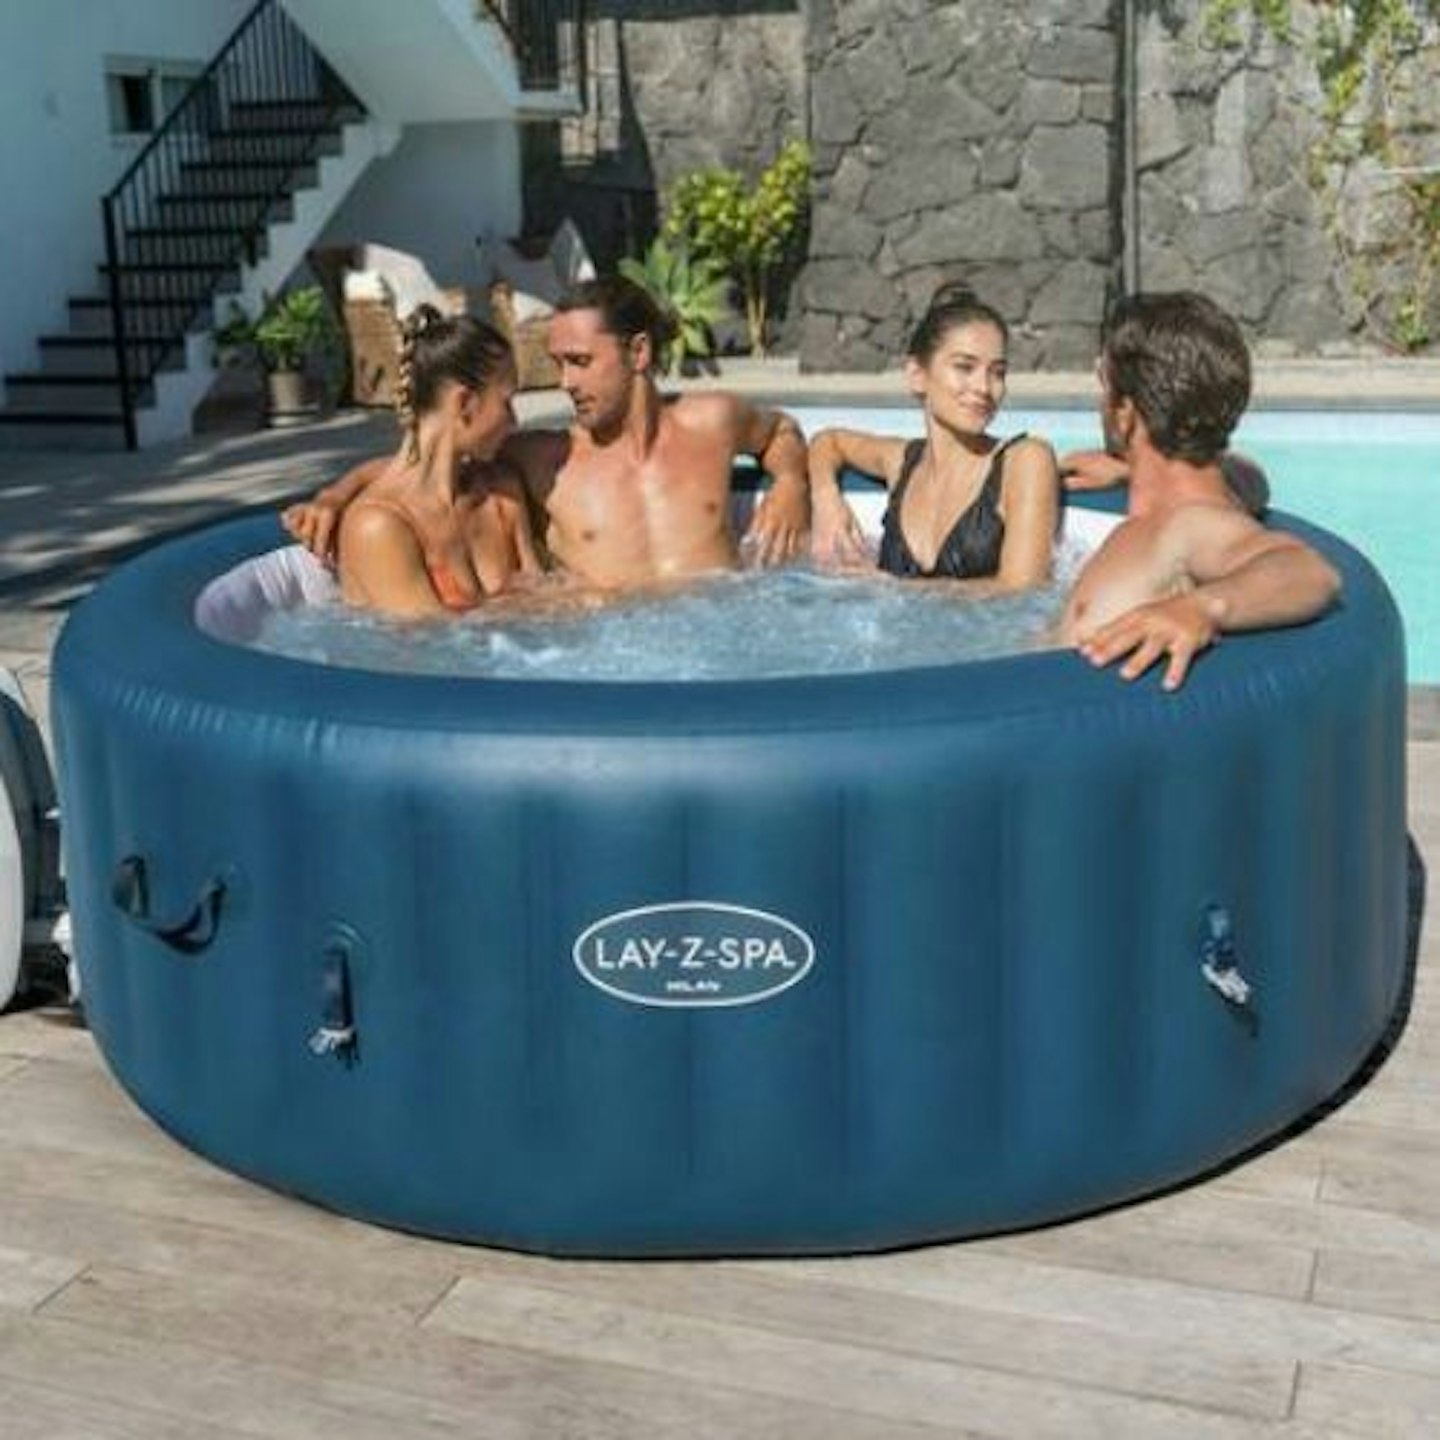 Lay-Z-Spa Milan 6 Person Smart Hot Tub